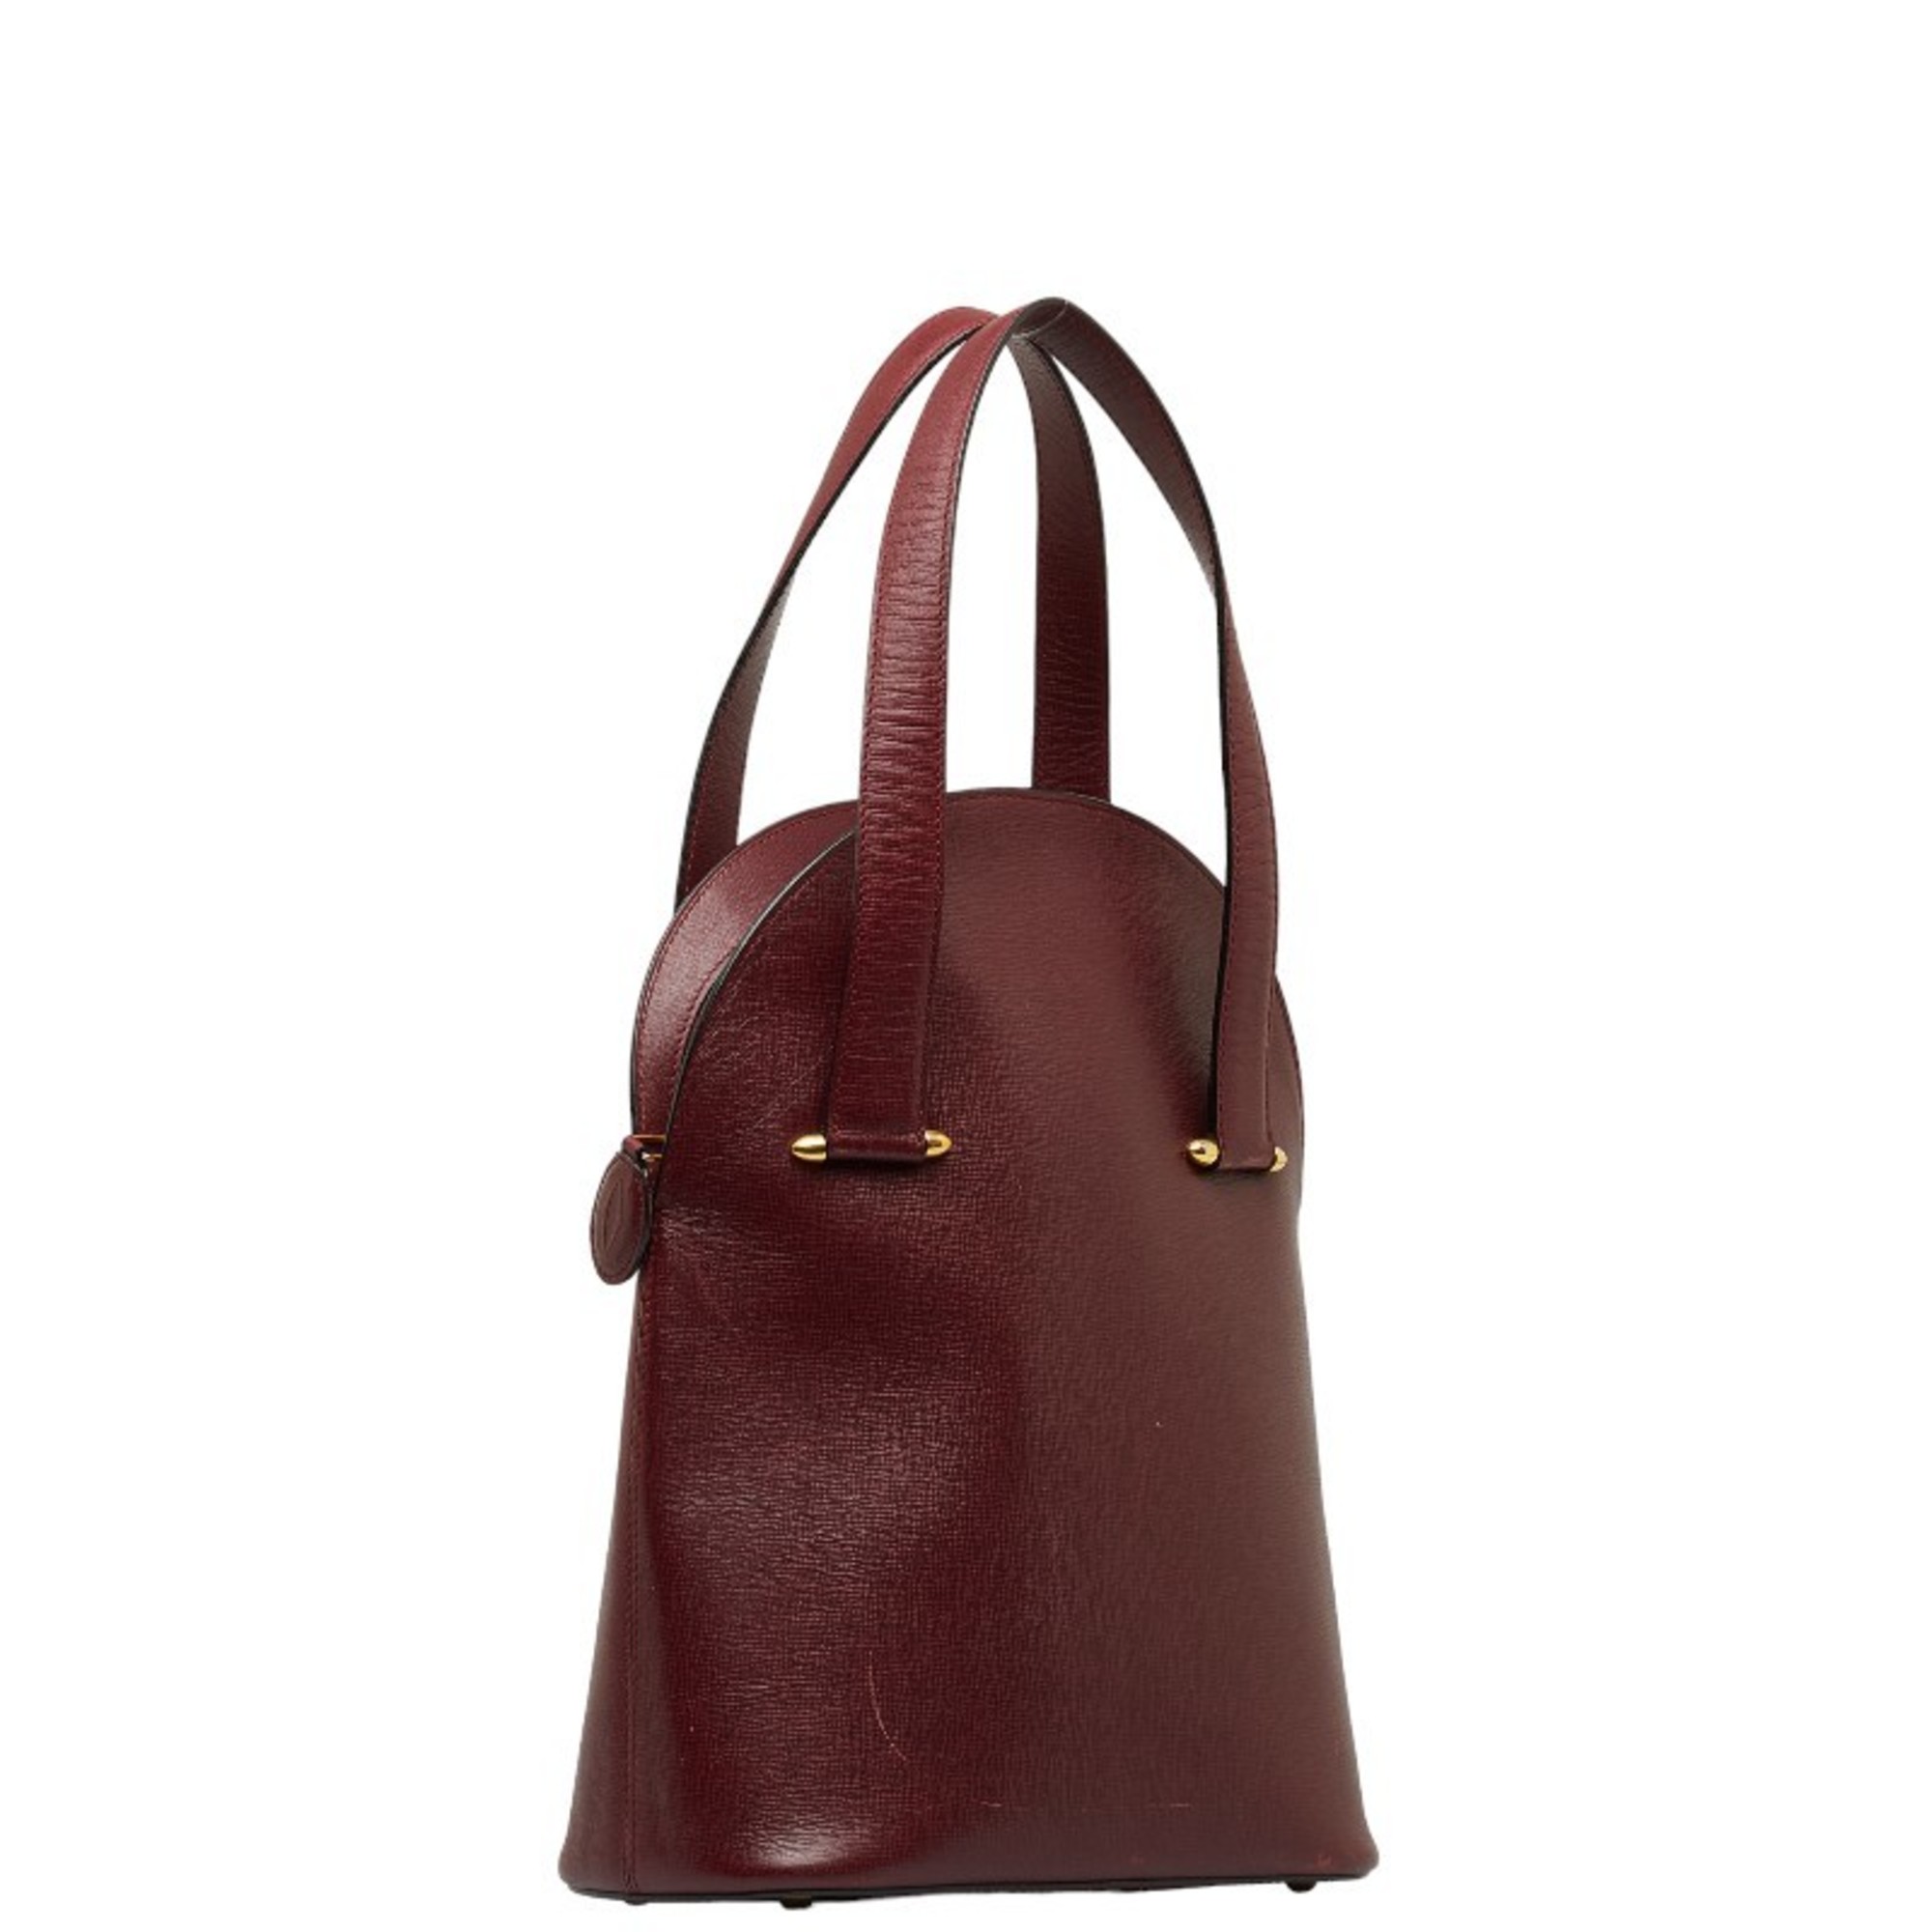 Cartier Must Line Handbag Tote Bag Wine Red Leather Women's CARTIER